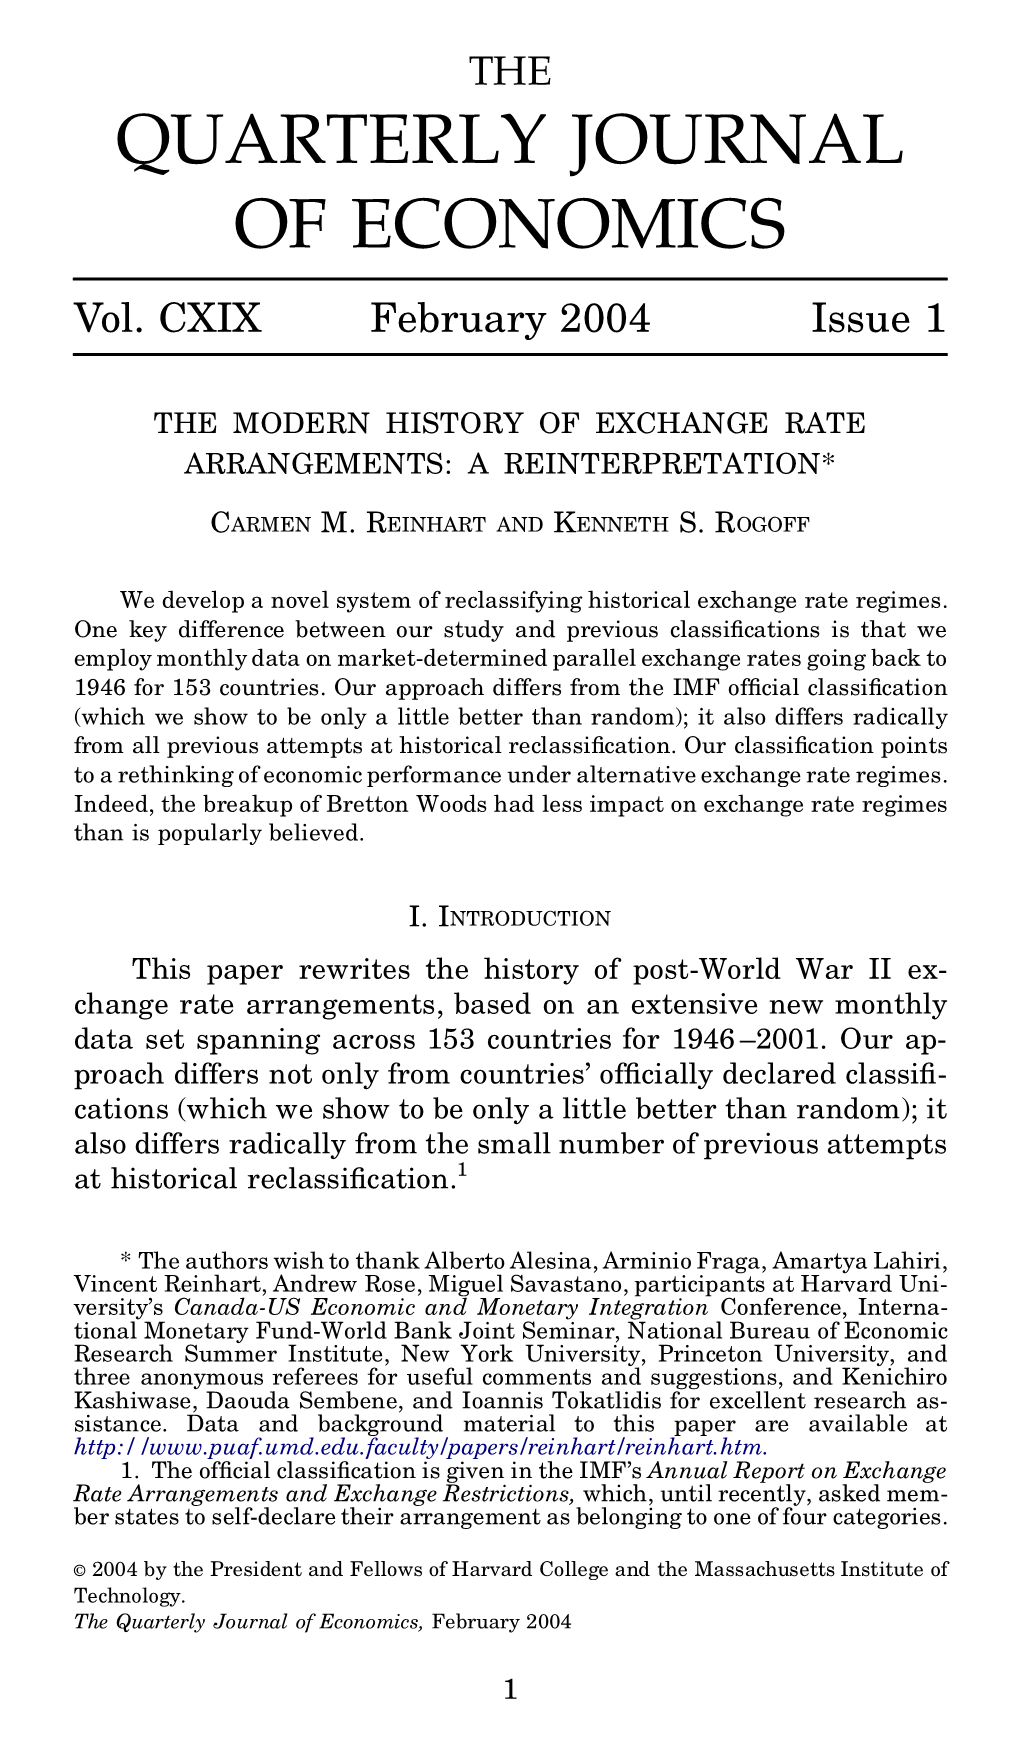 The Modern History of Exchange Rate Arrangements